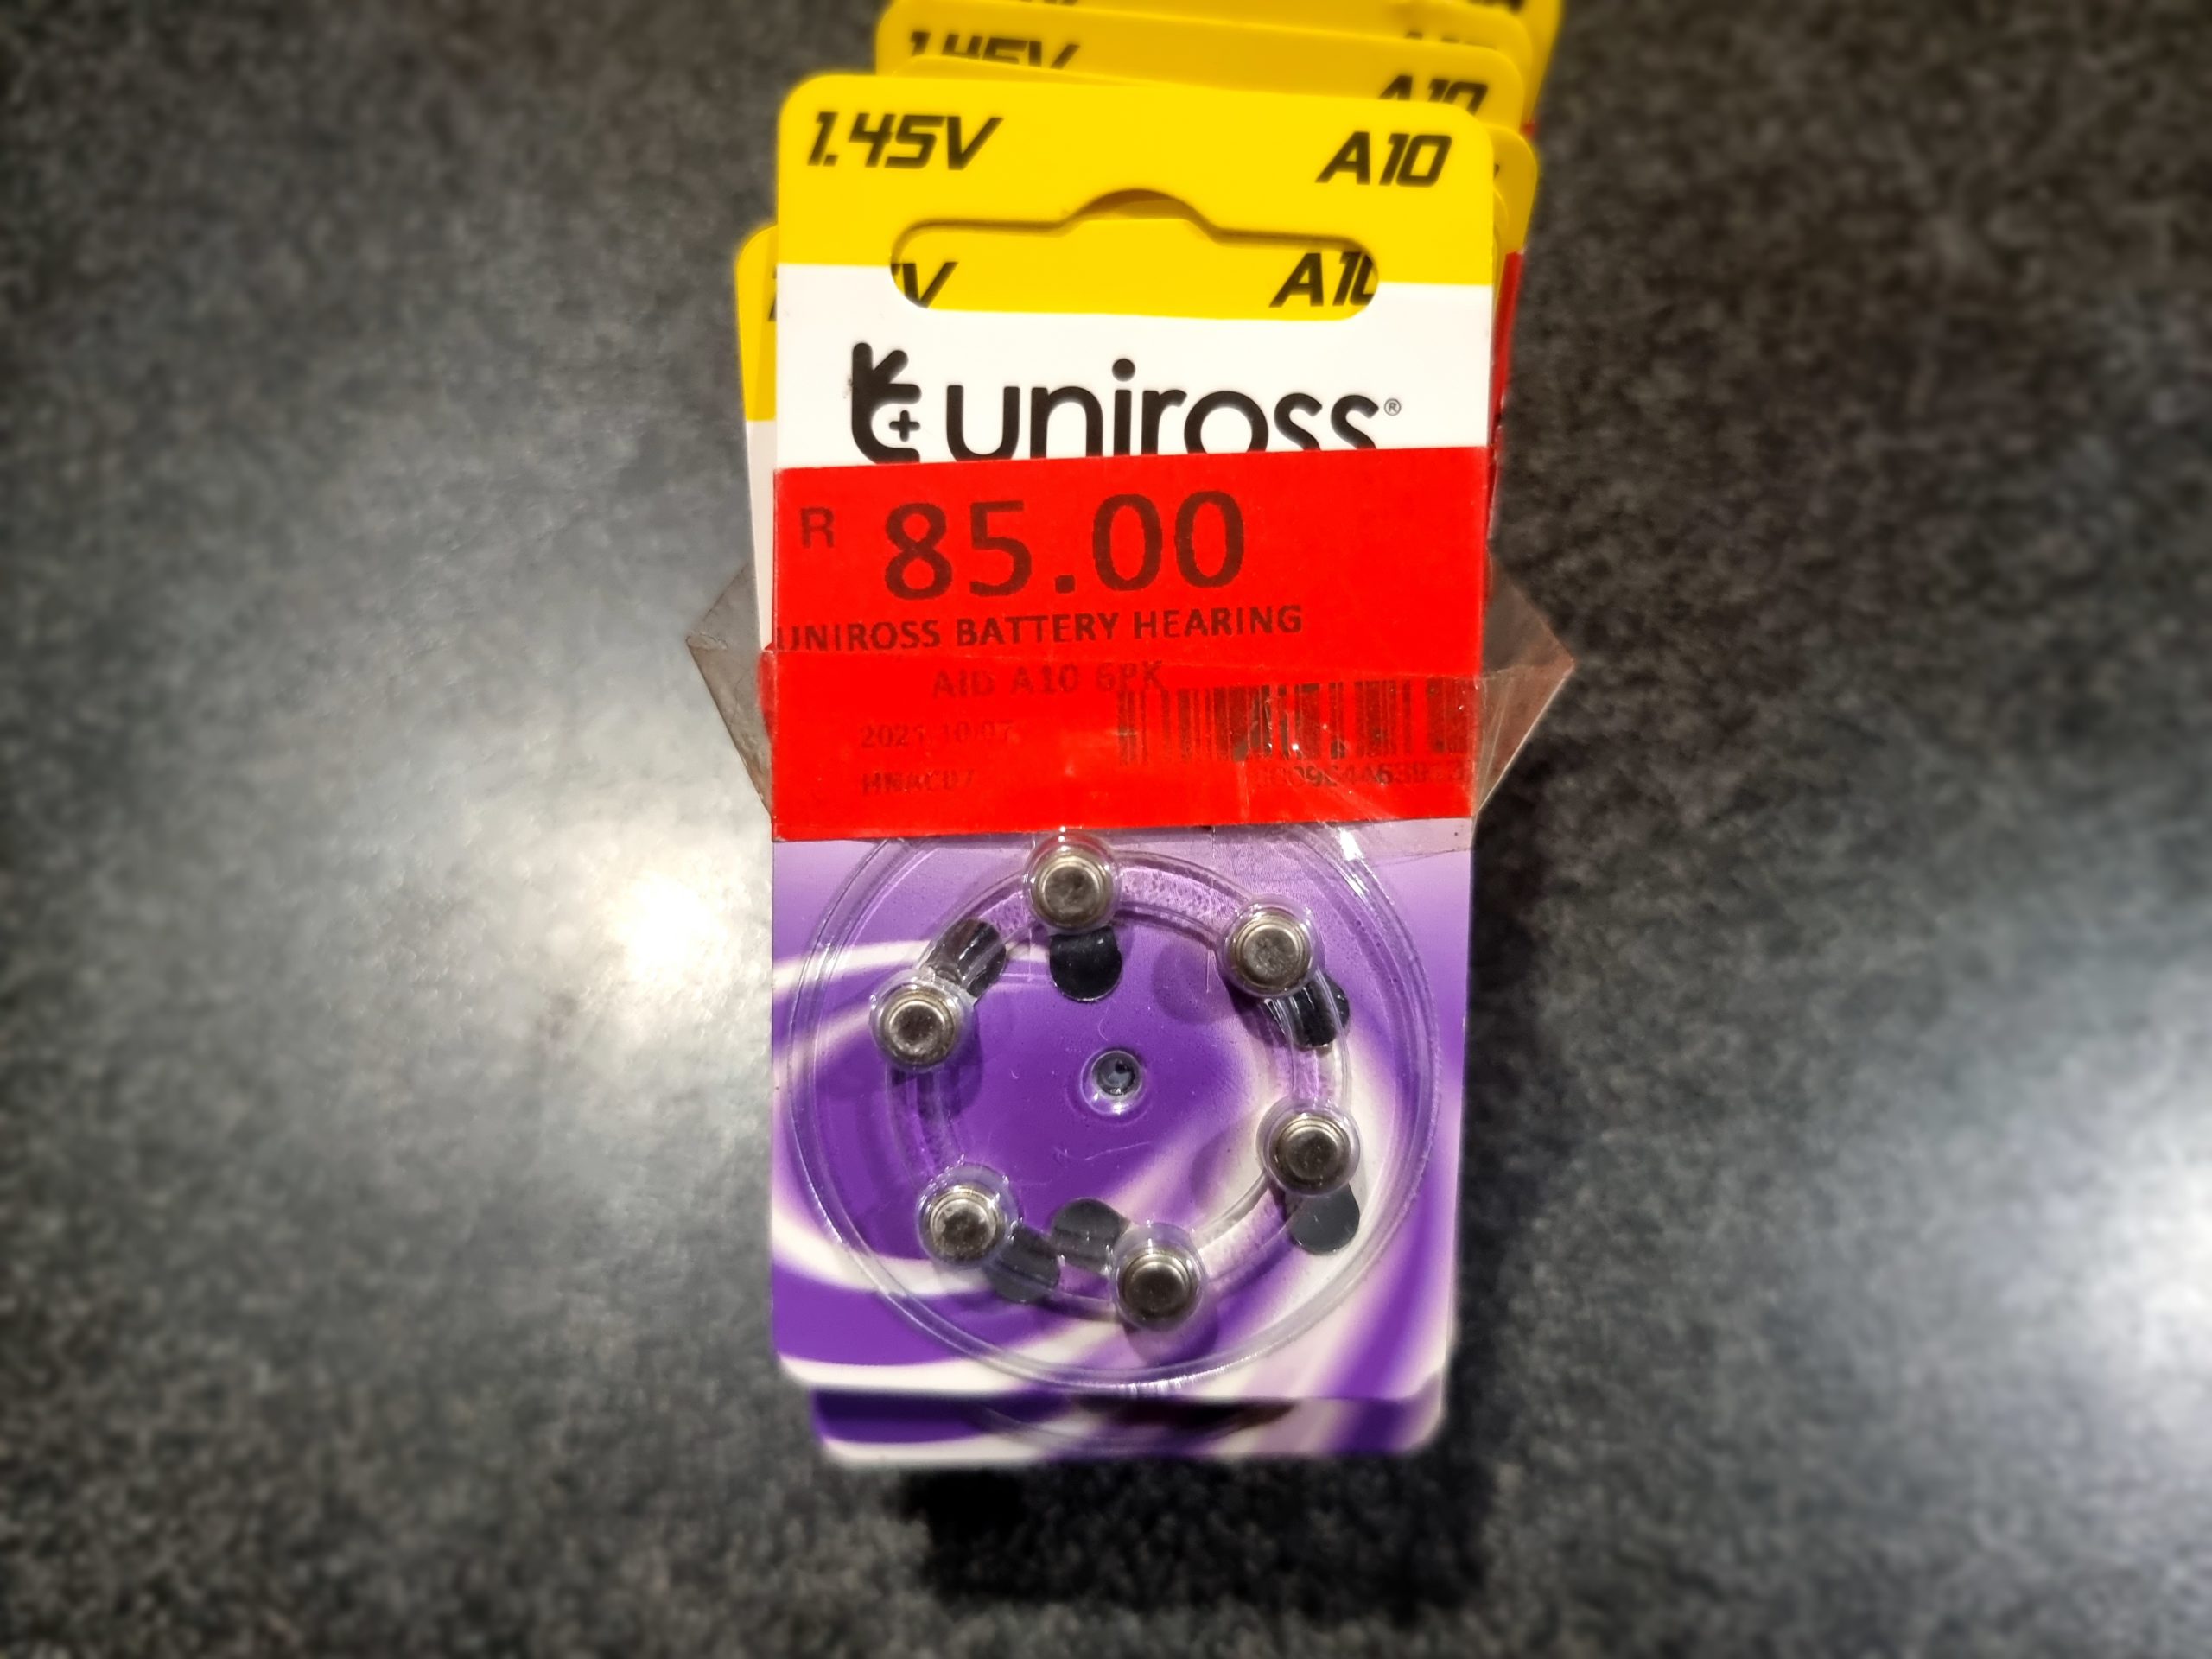 Uniross hearing aid battery A10 x 12